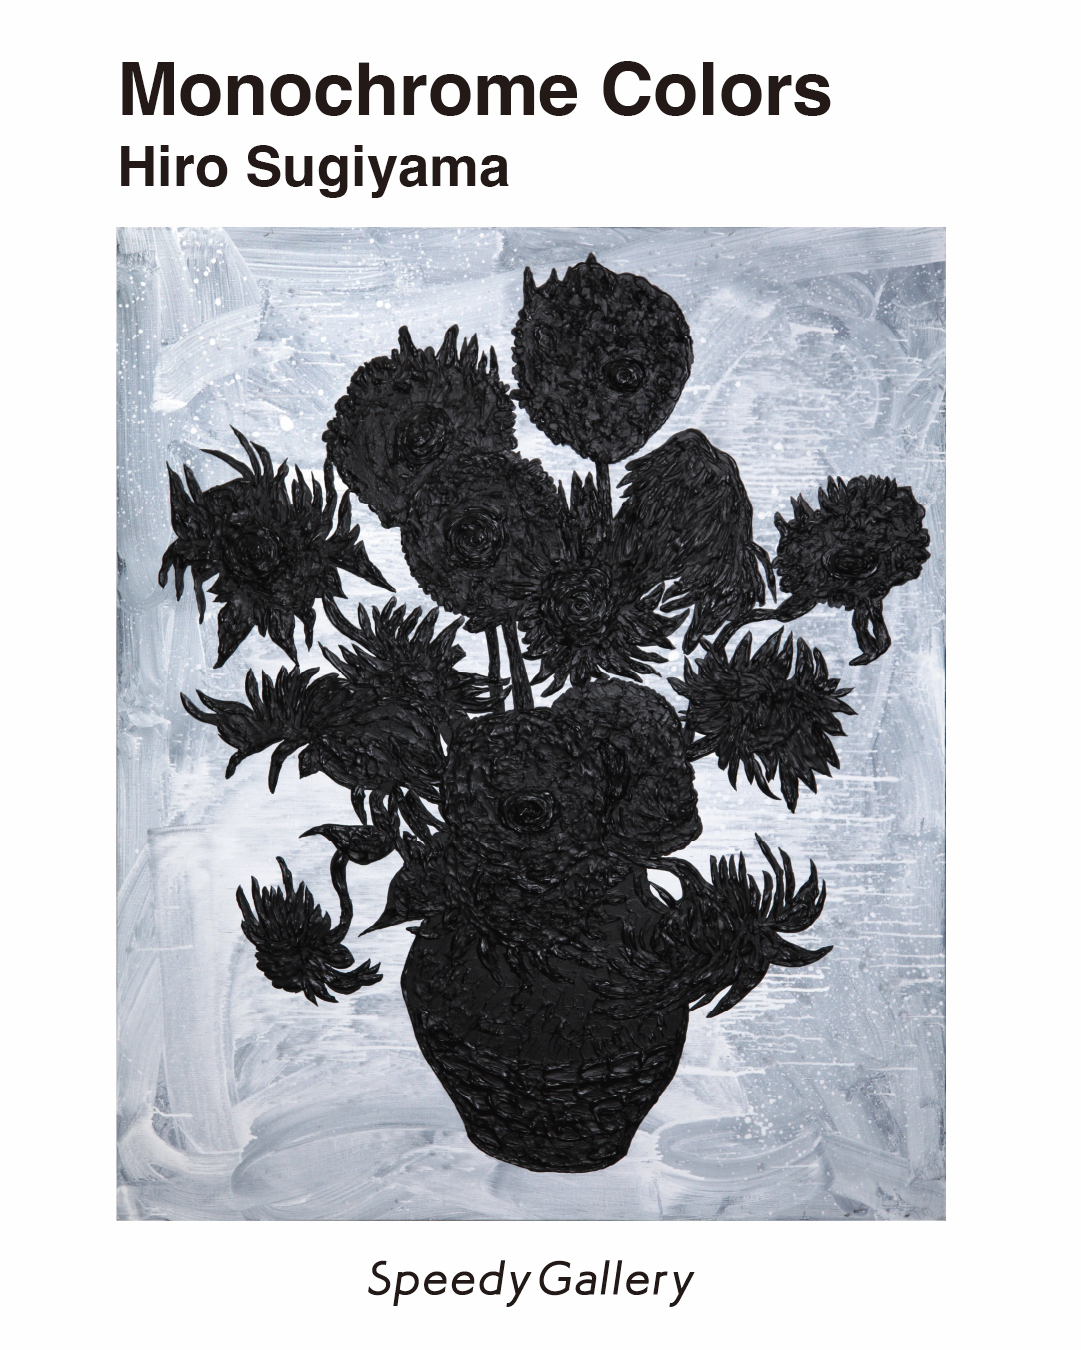 MONOCHROME COLORS by Hiro Sugiyama